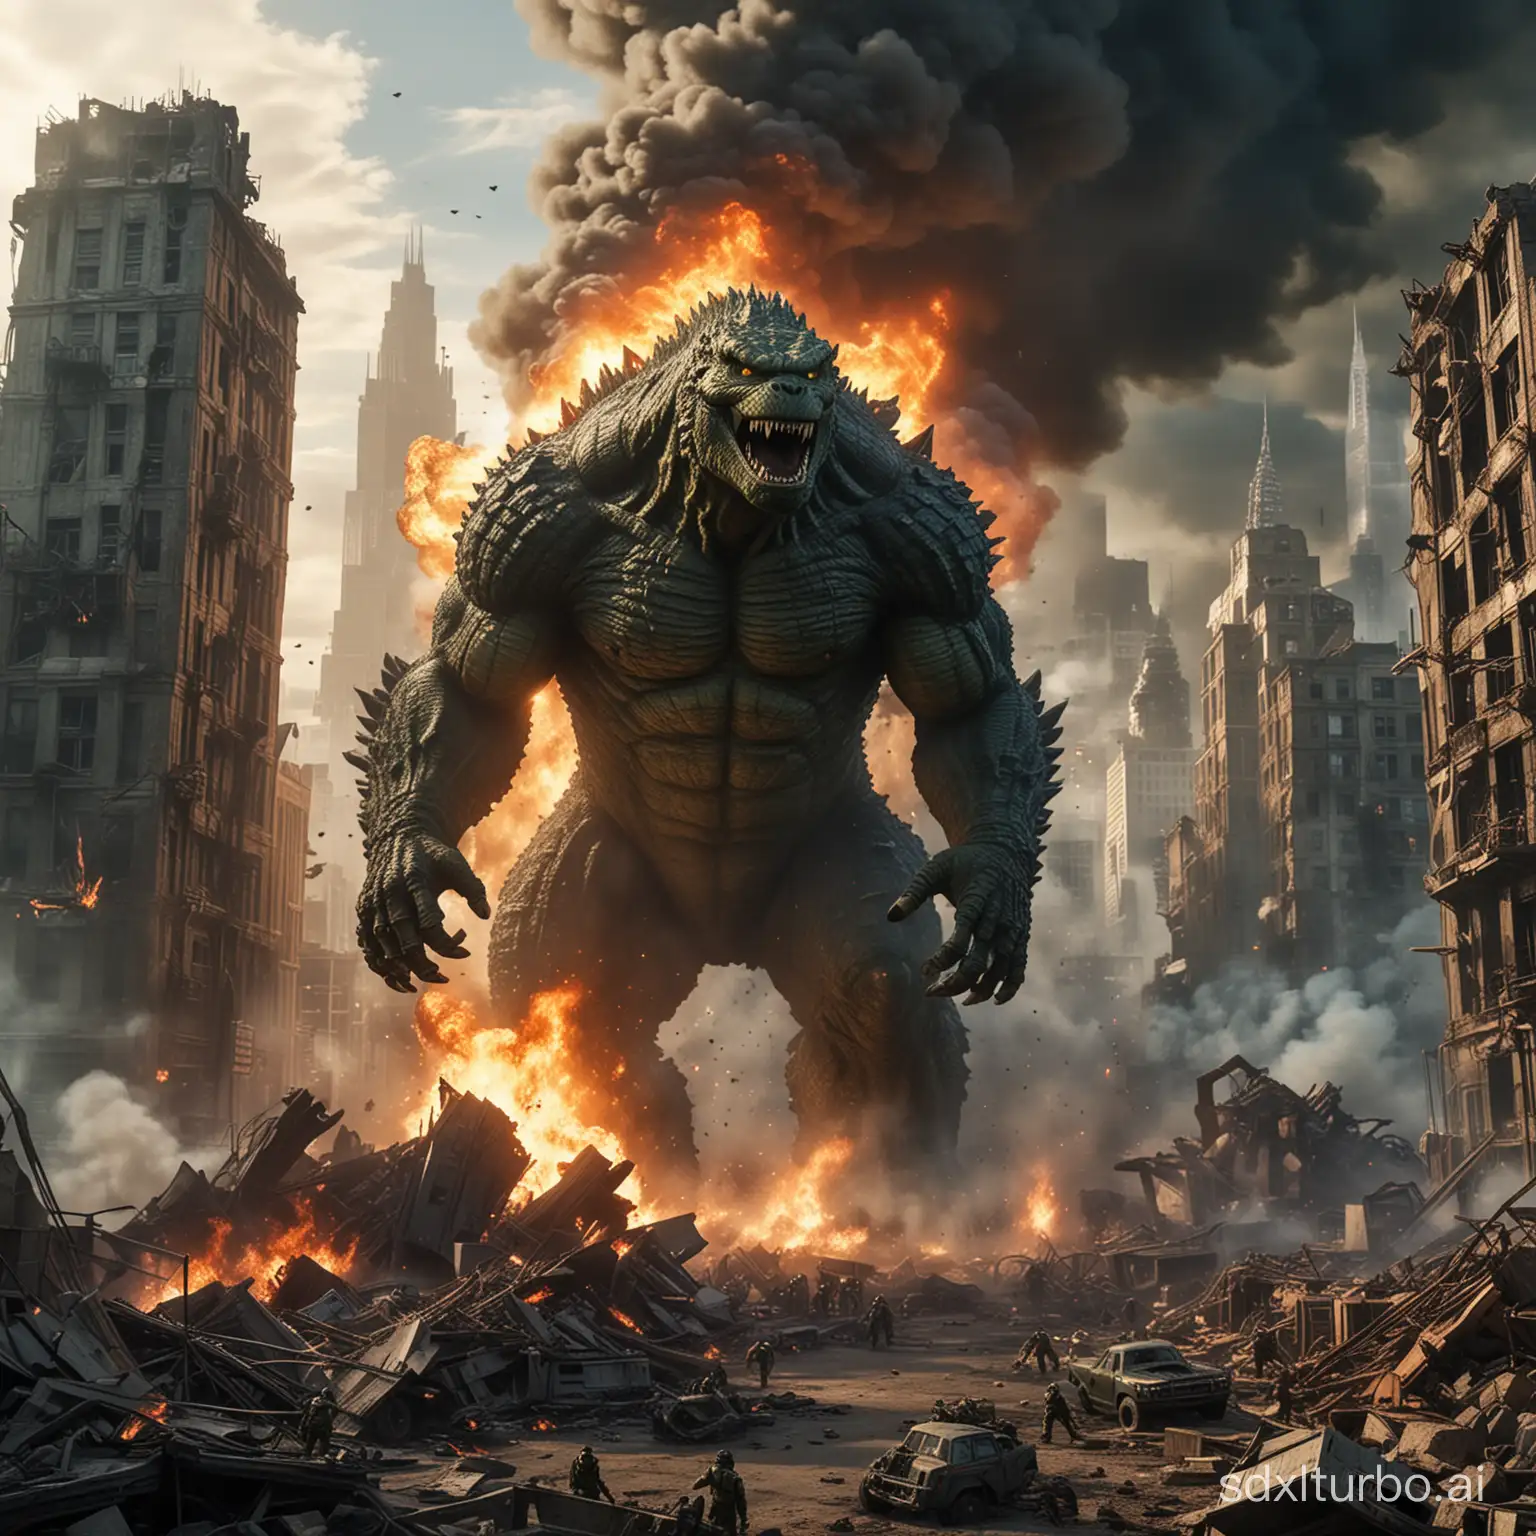 Epic-Clash-Godzilla-vs-Hulk-Amidst-Ruined-Cityscape